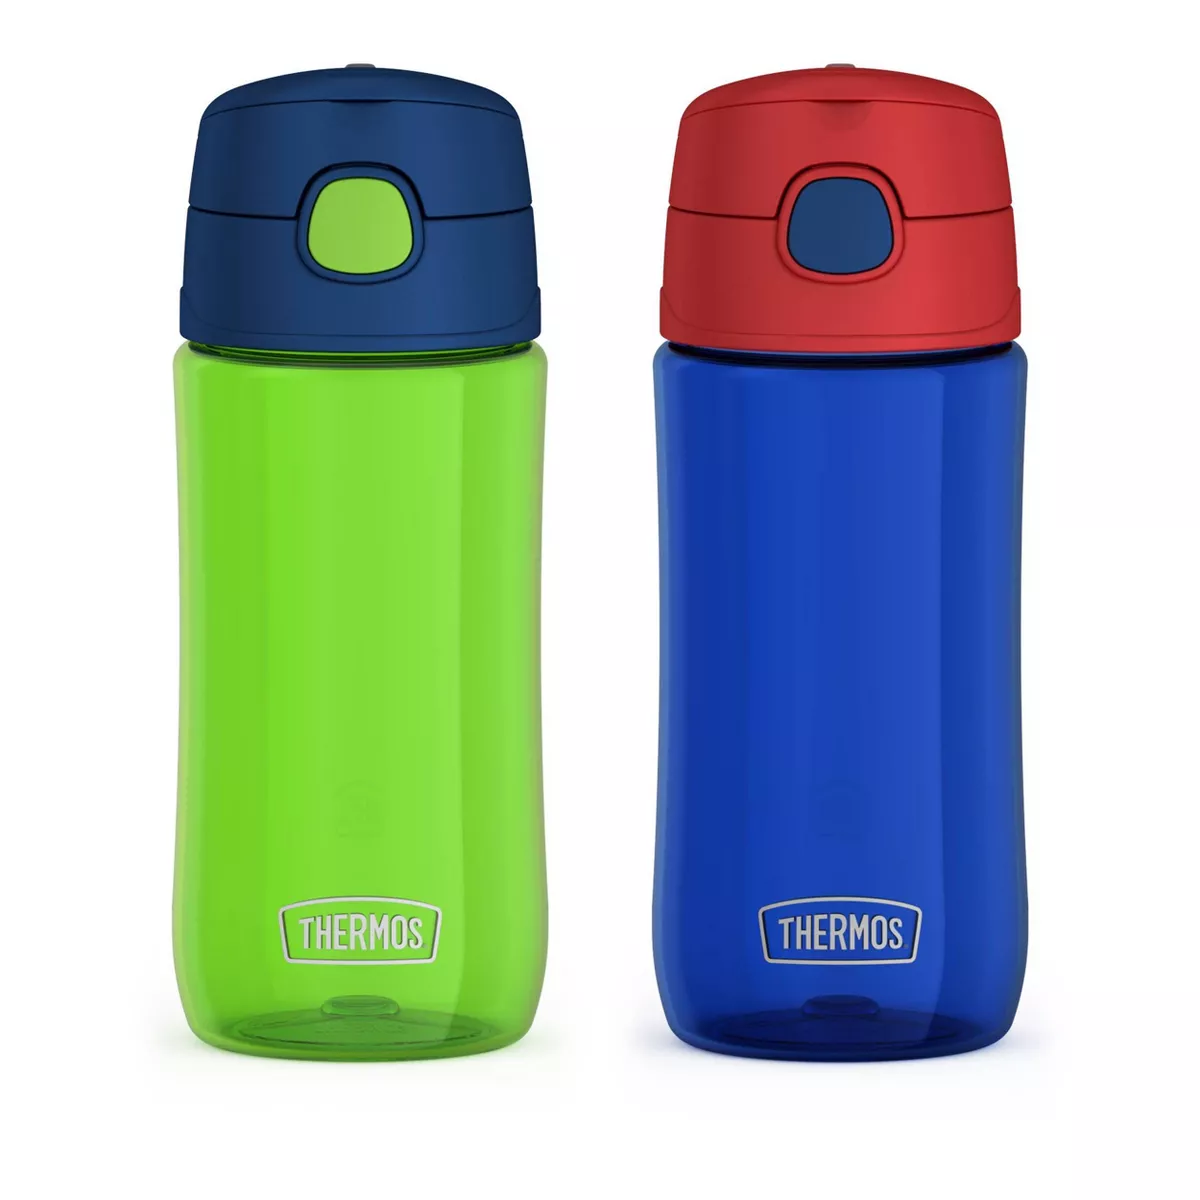 ThermoFlask 40 oz Tritan Plastic Spout Water Bottle, 2 Pack, Pink